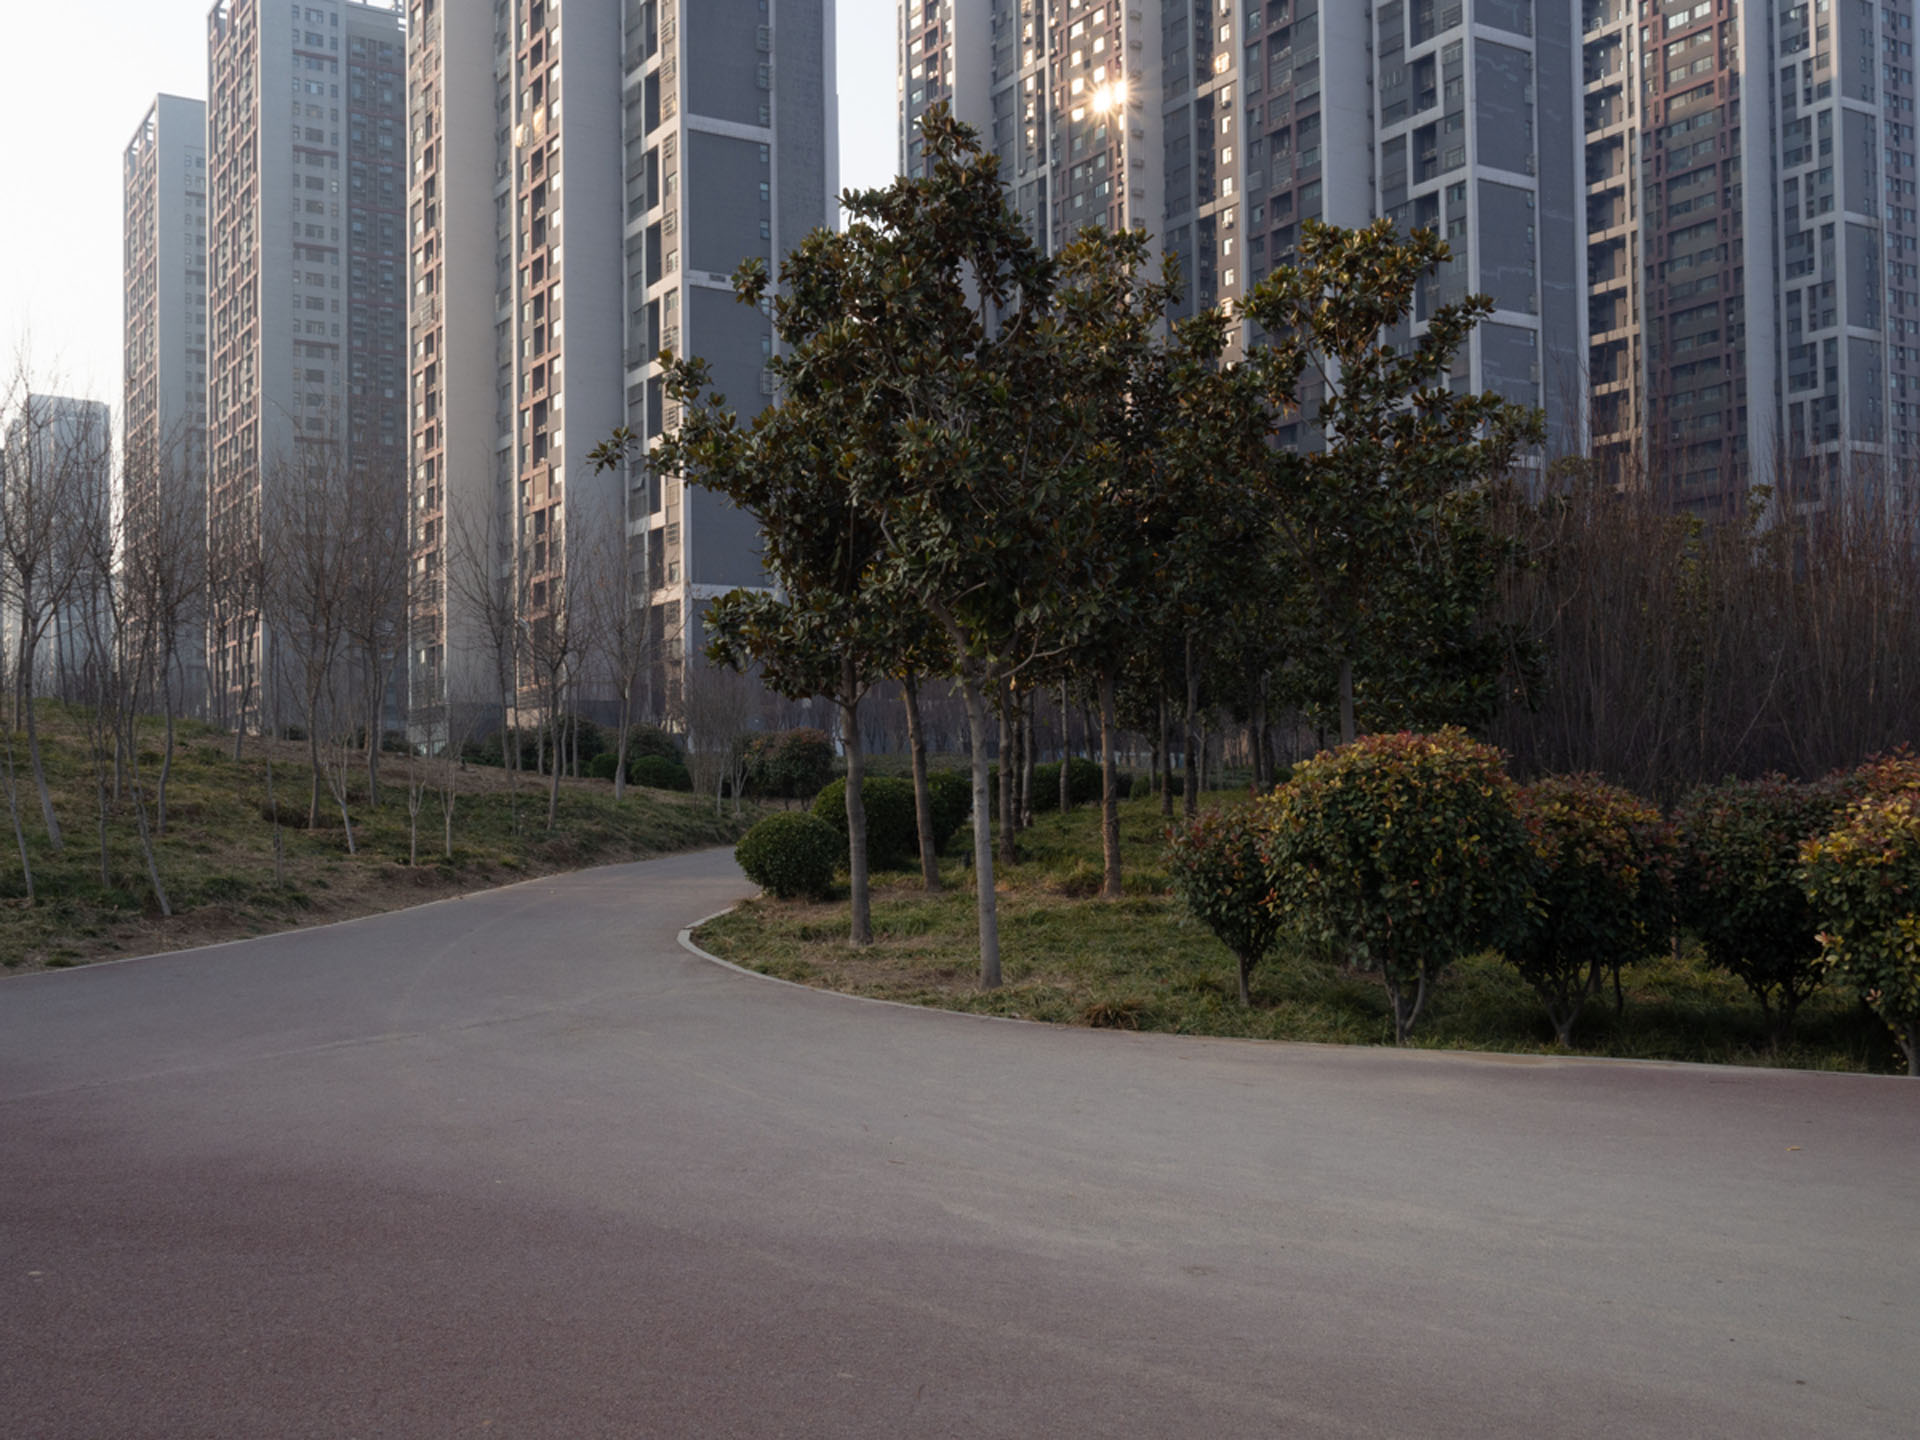 One of the residential quarters of Zhengzhou.